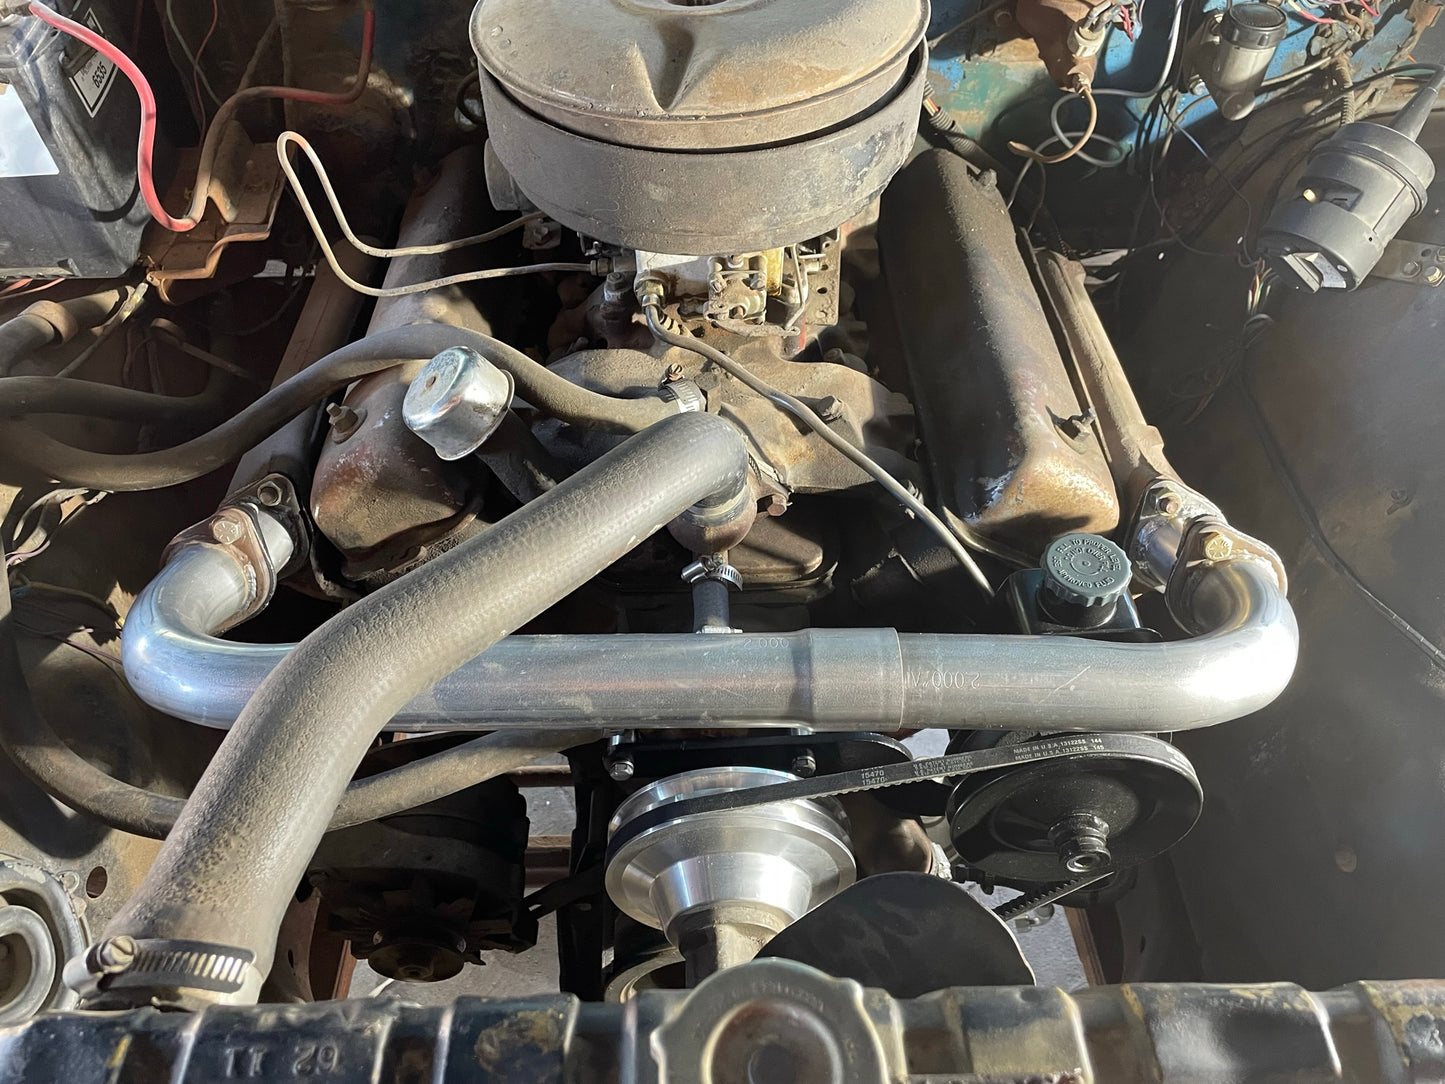 Power steering pump kit for Ford 292-312 Y-Block engine